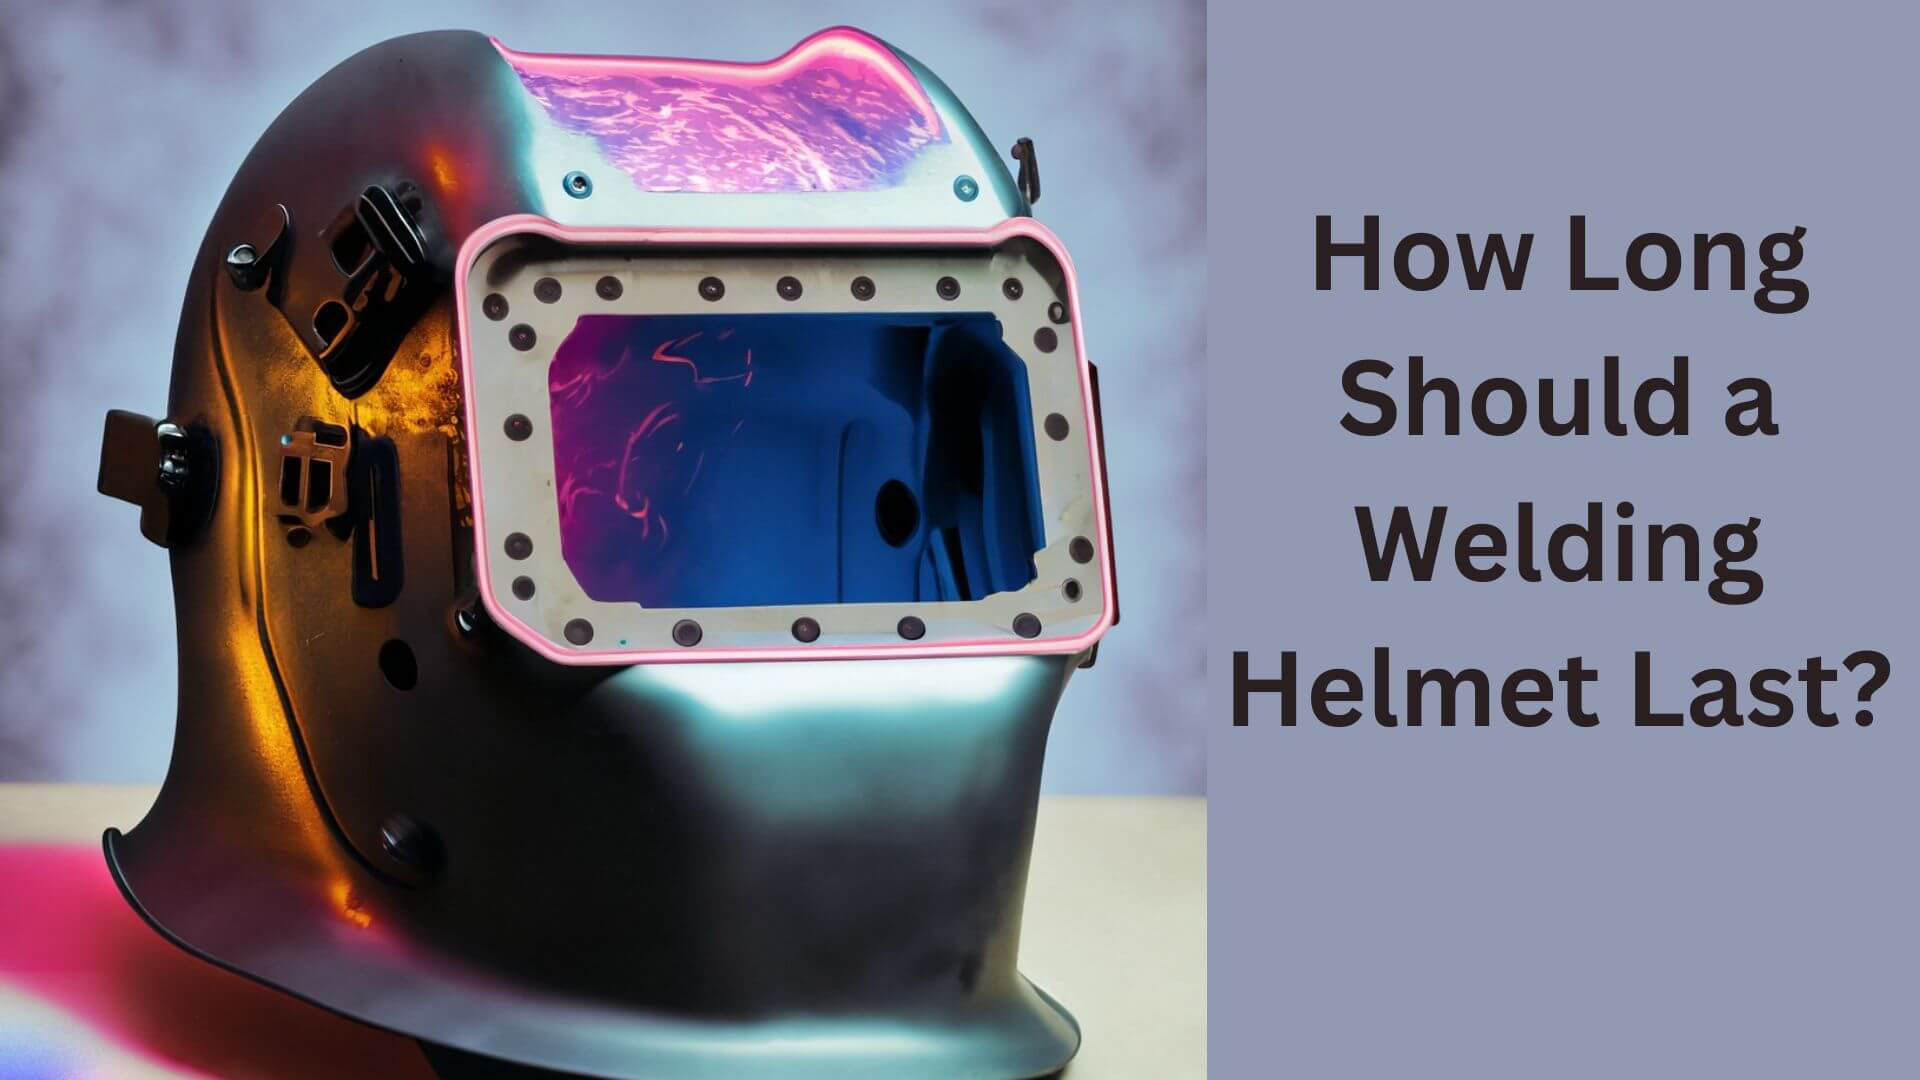 How Long Should a Welding Helmet Last?